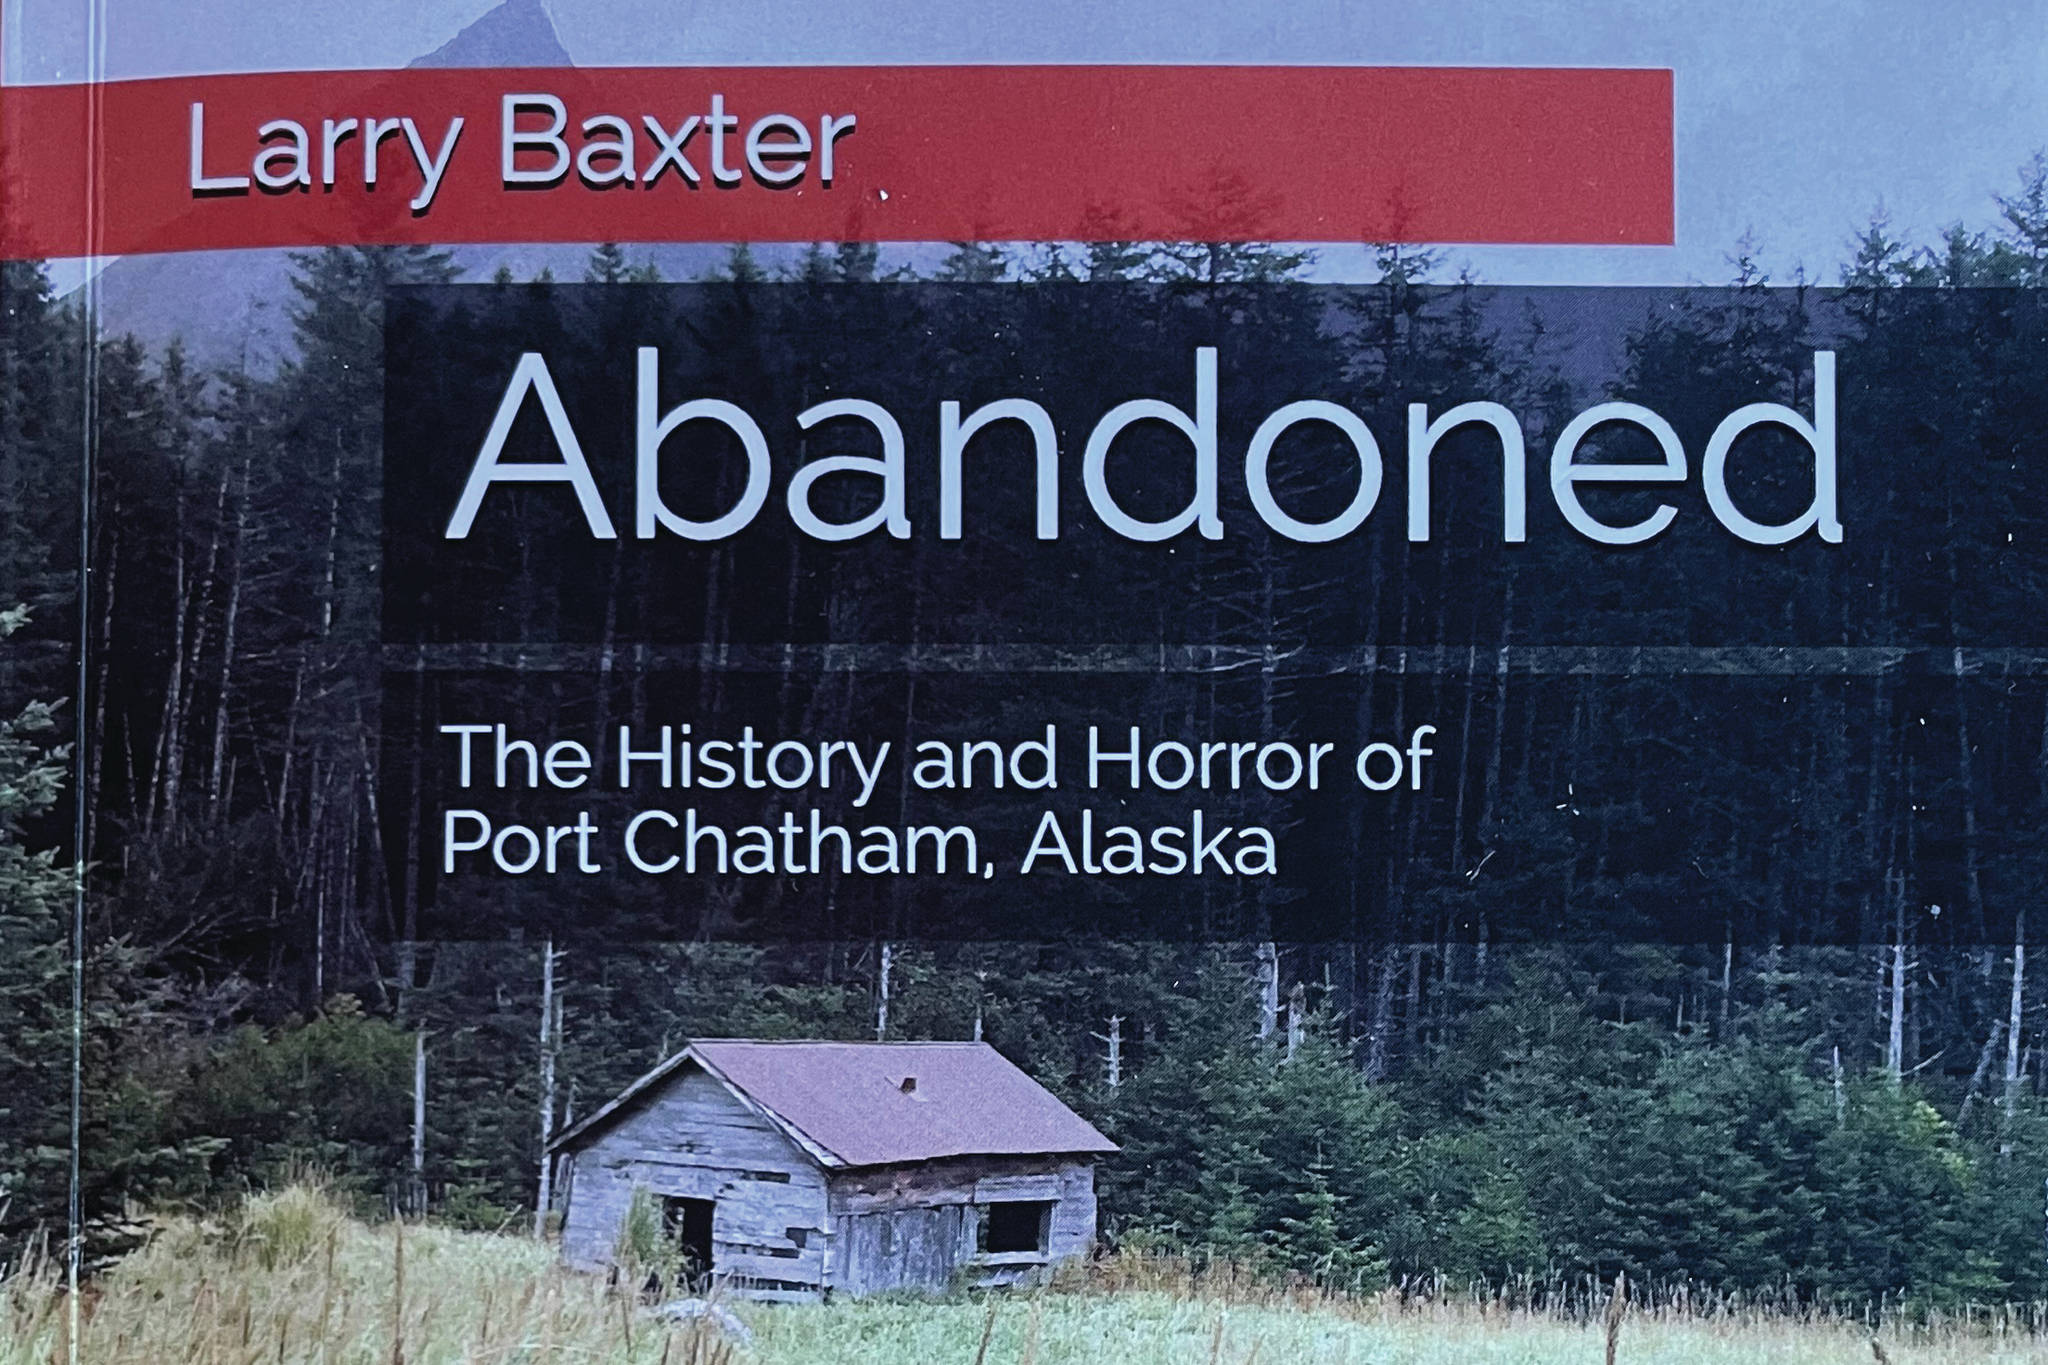 The cover of Larry Baxter's novel, "Abandoned." (Photo by McKibben Jackinsky)